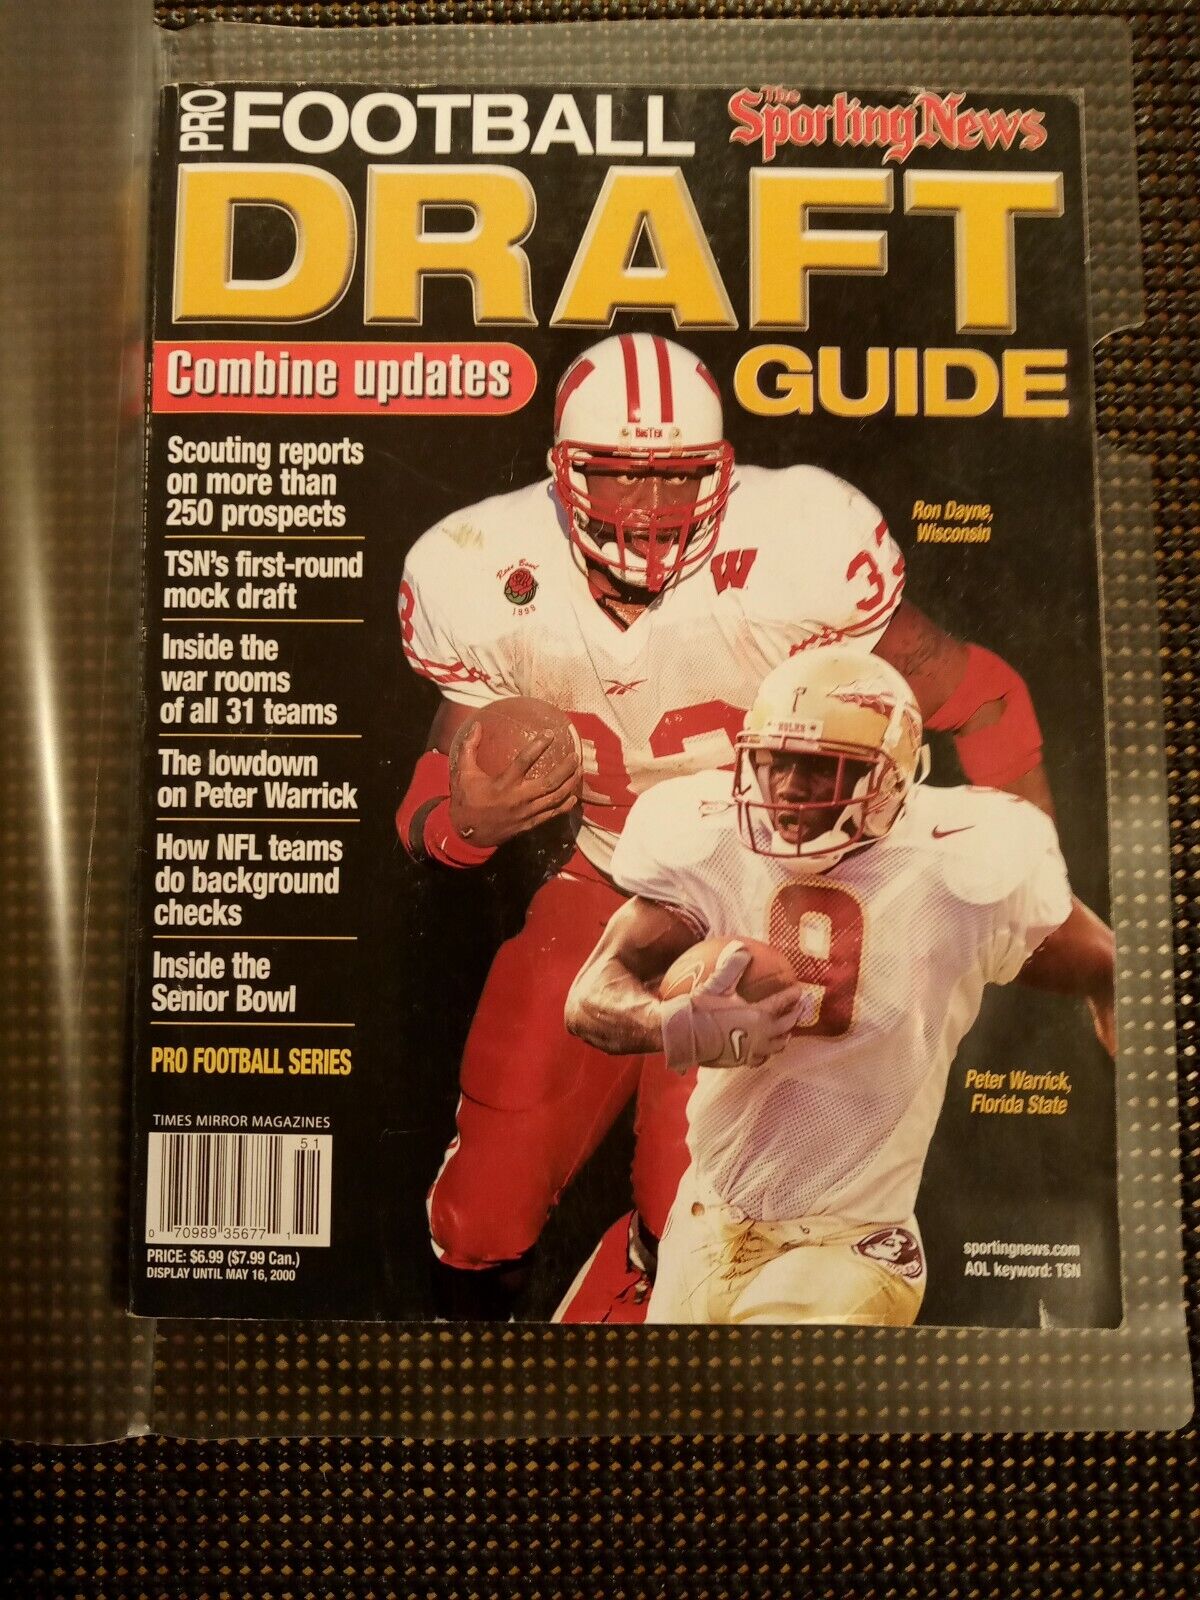 🔥Tom Brady Rookie yr  RARE 2000 Sports News Pro Football Draft Guide, 1 of 1📈